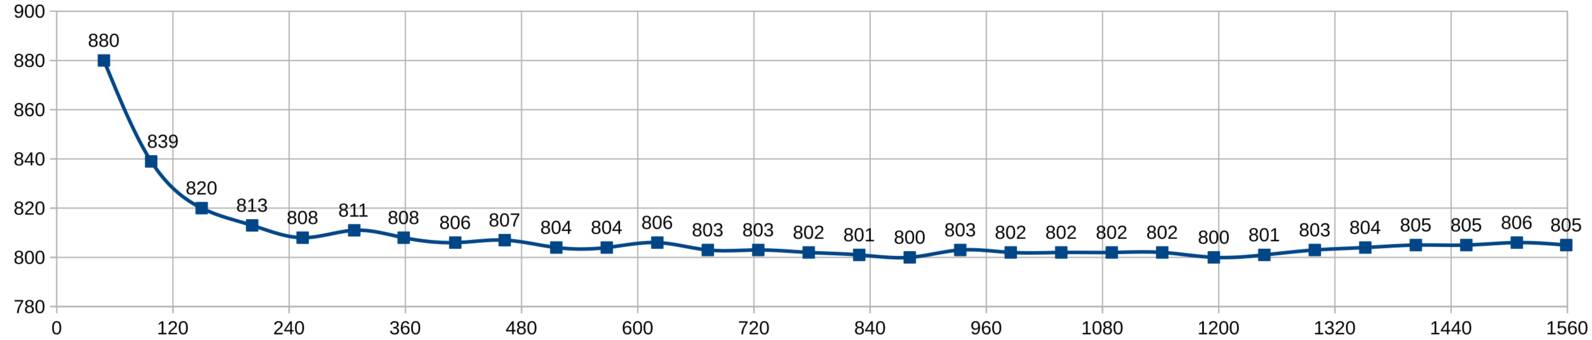 Plot of result versus time during 30 Cinebench R15 runs